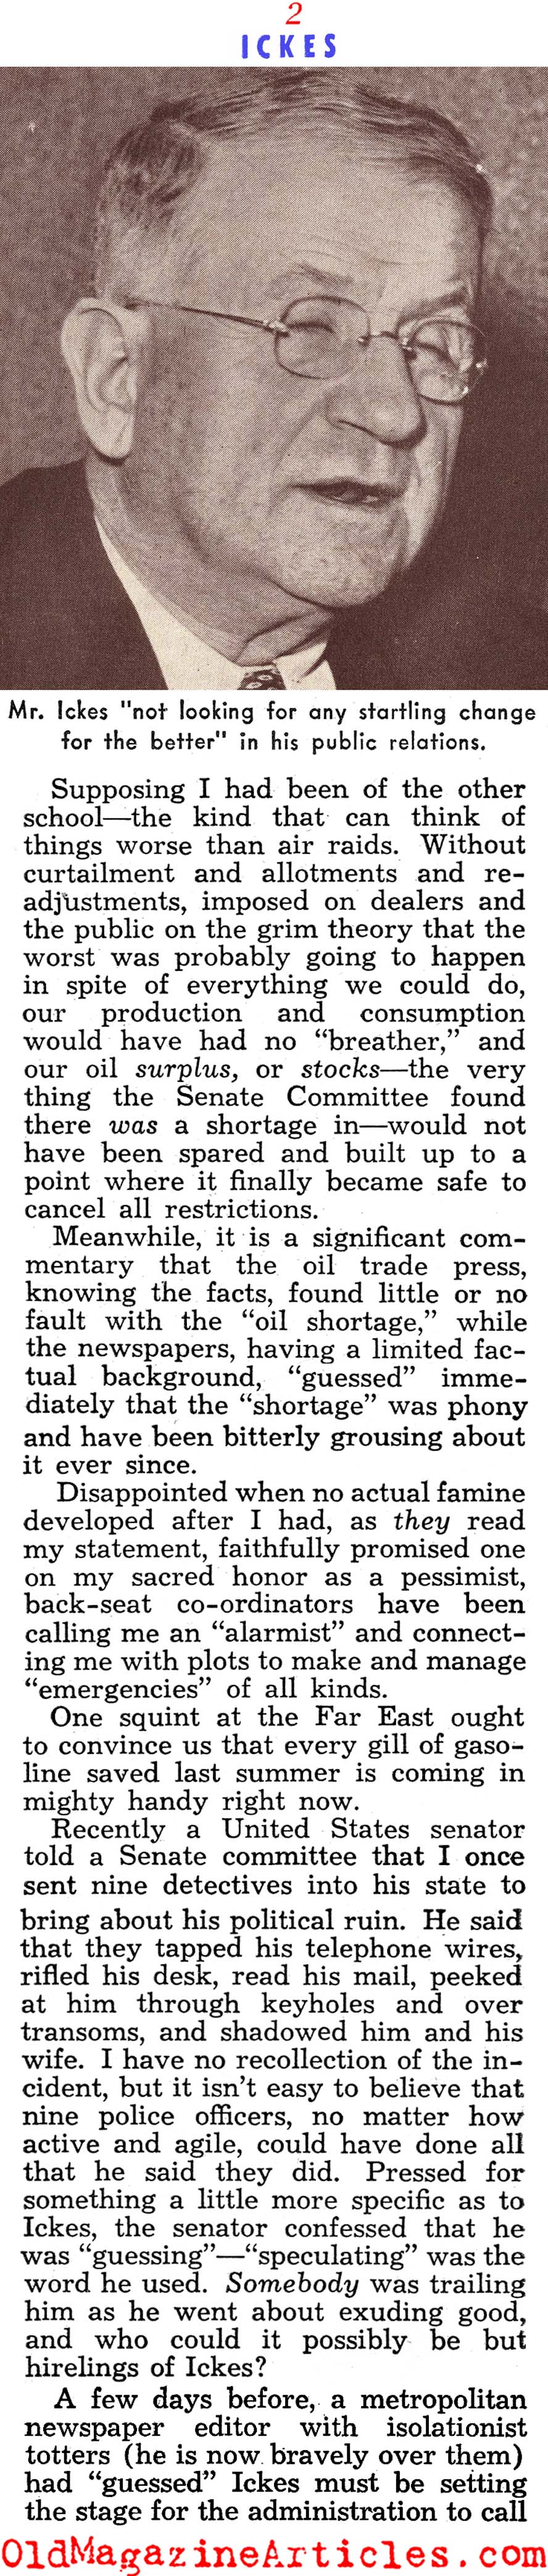 Harold Ickes: FDR's Gas Czar (Liberty Magazine, 1942)